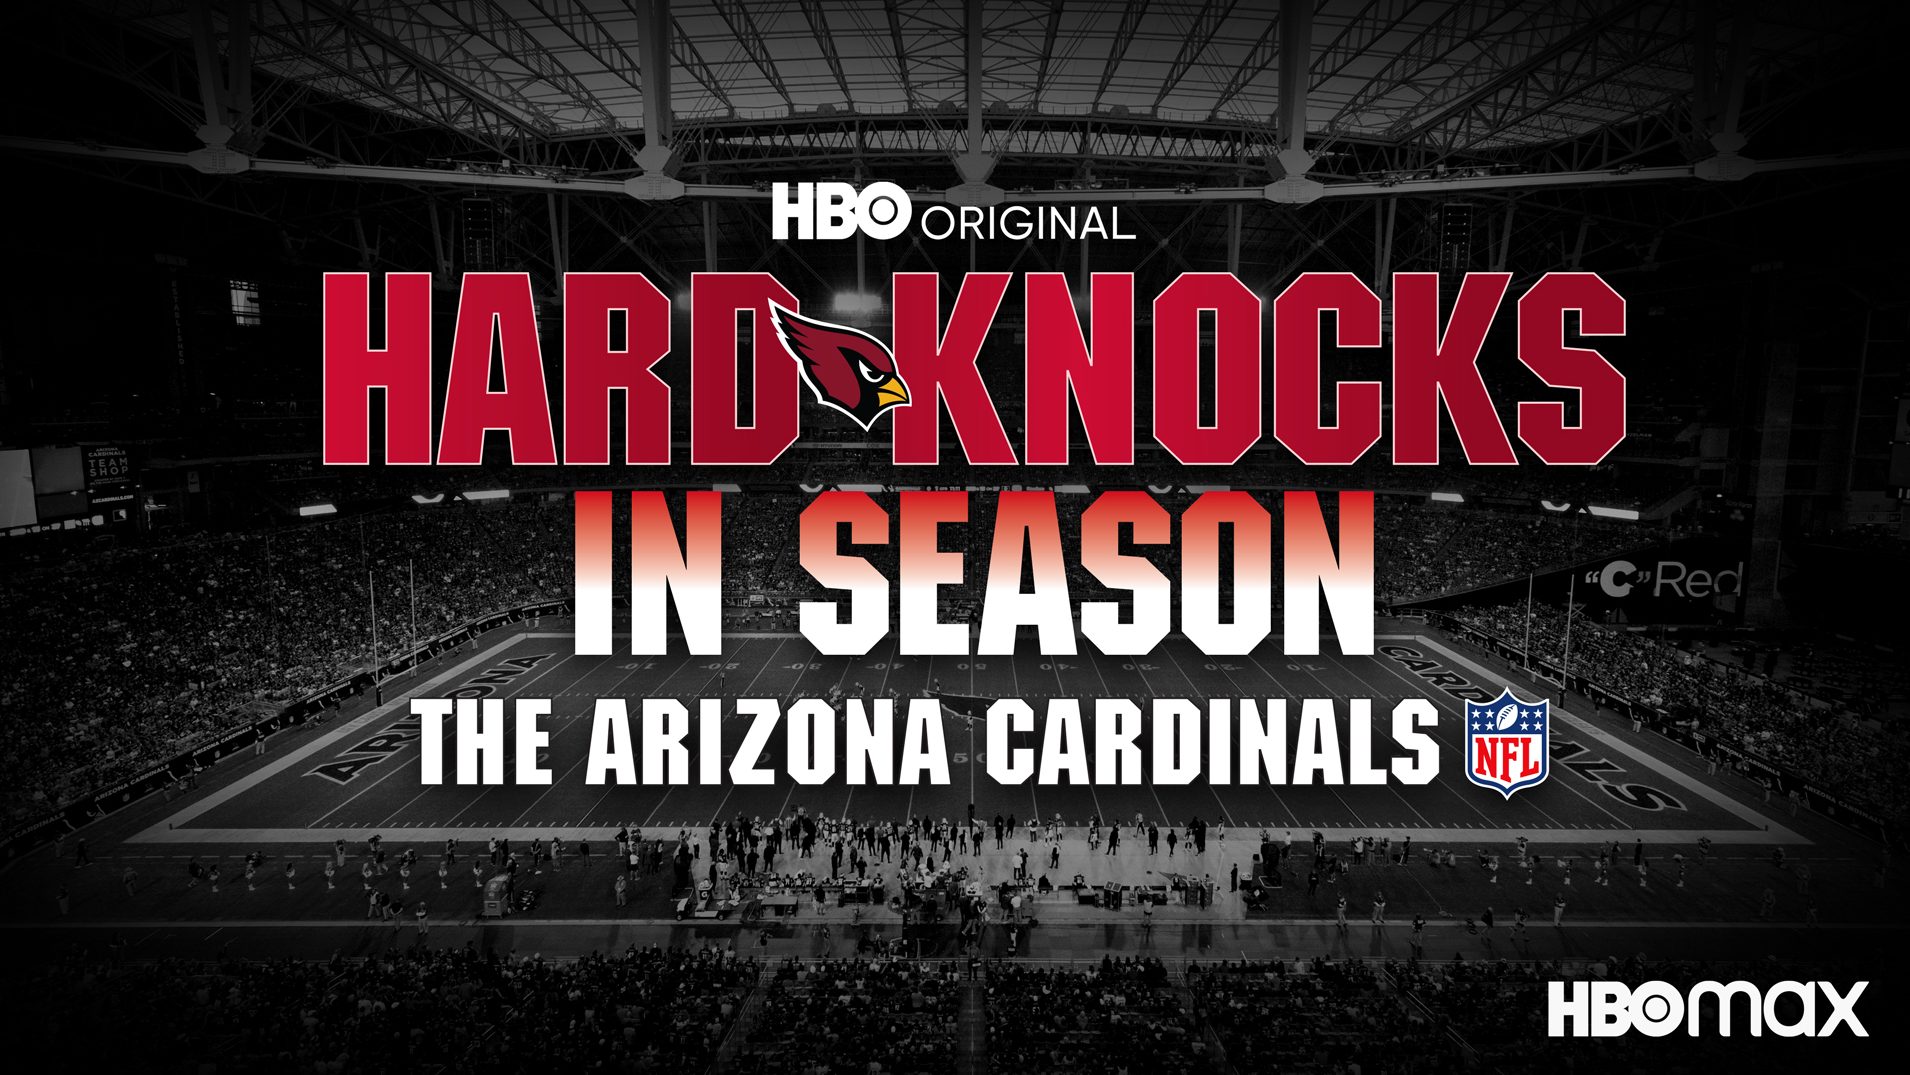 How to Watch Hard Knocks In Season The Arizona Cardinals on HBO Max